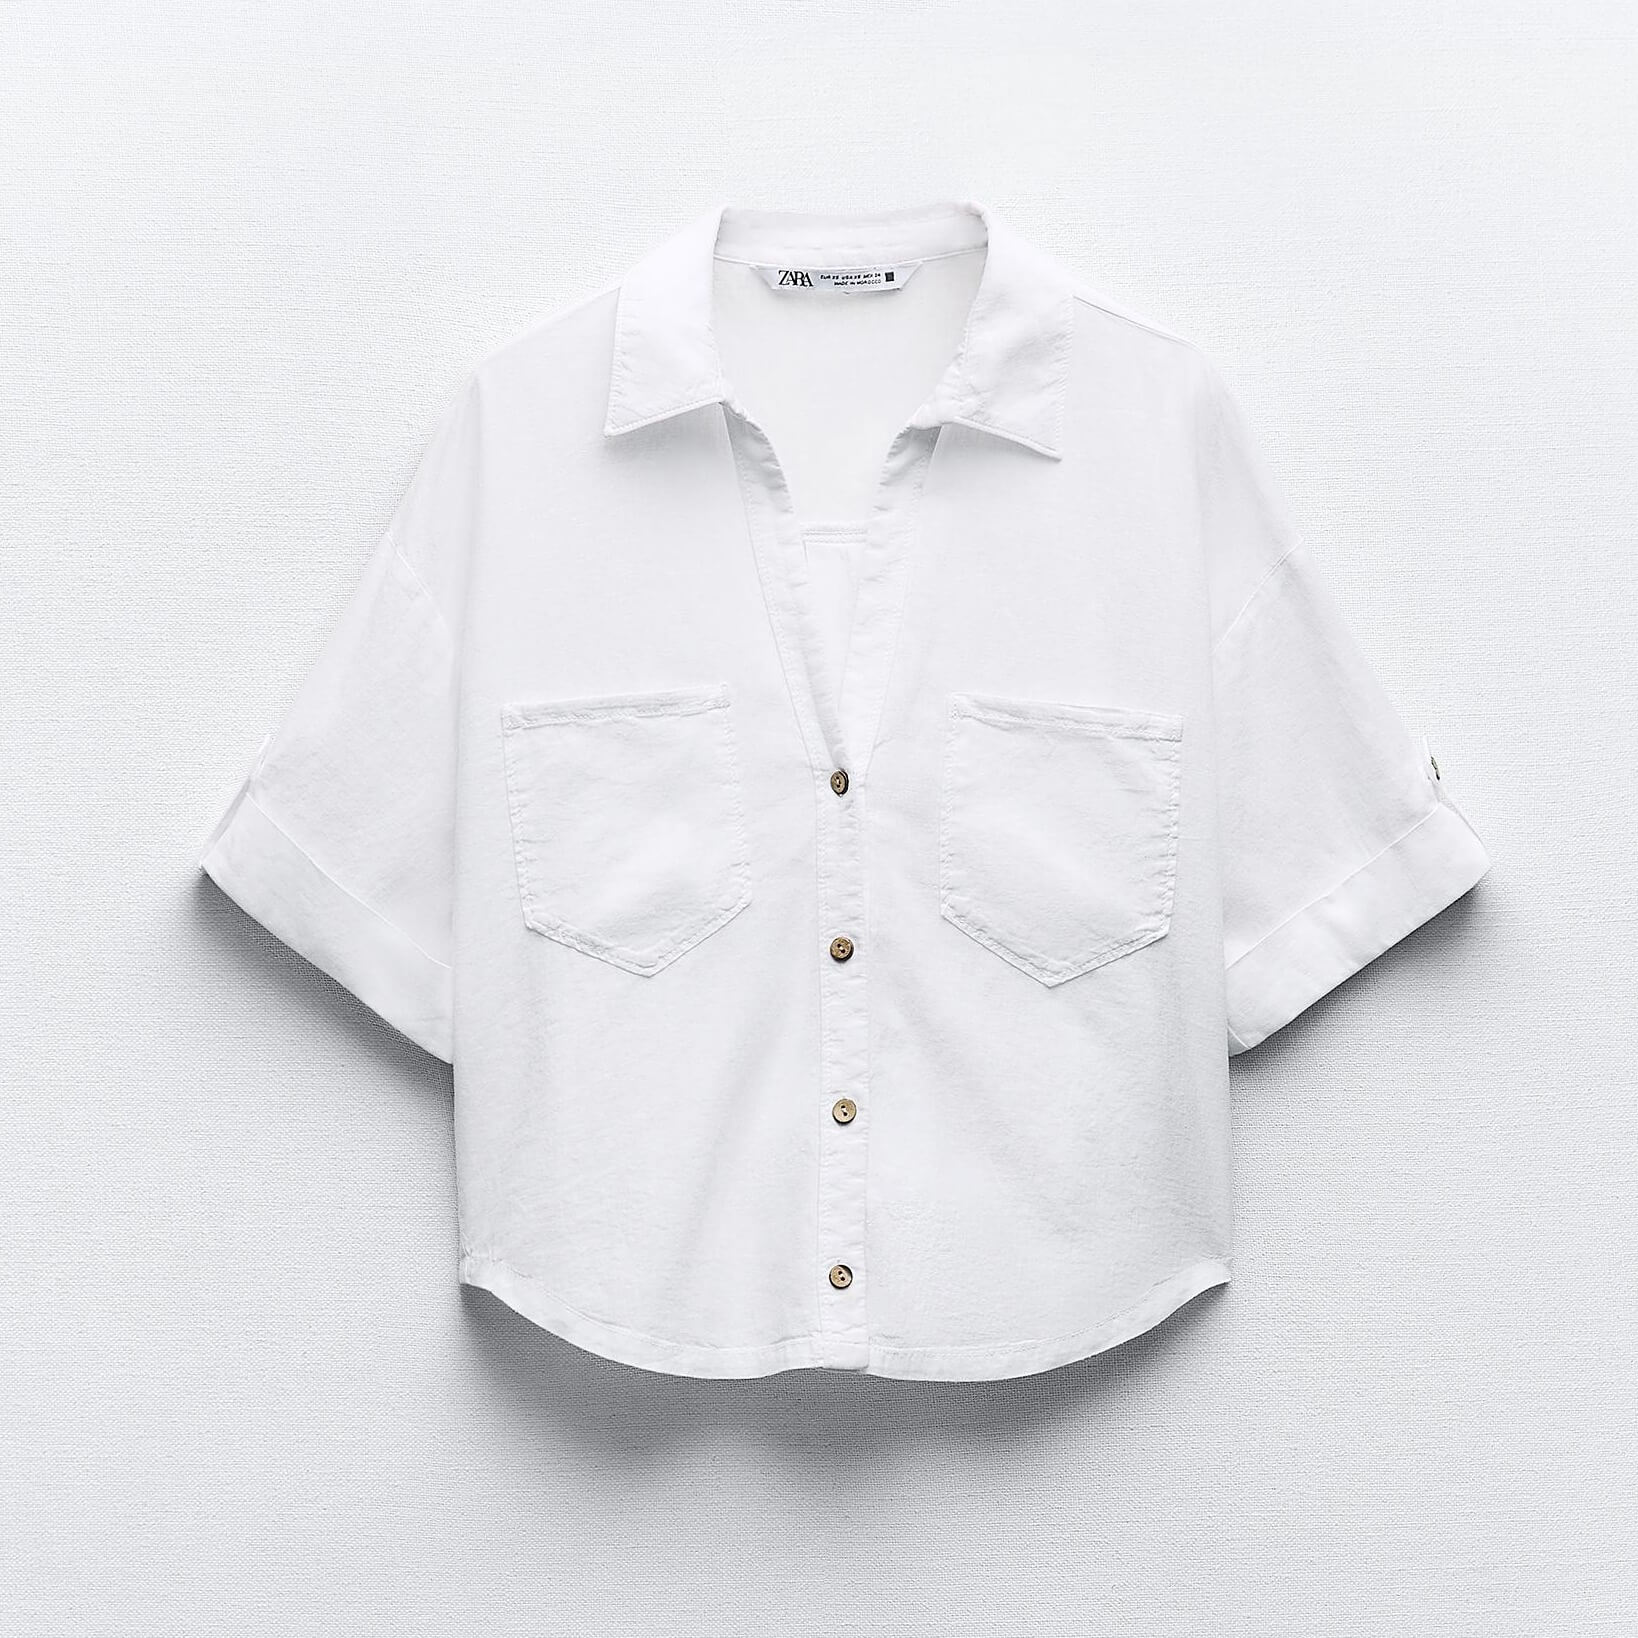 Рубашка Zara Linen Blend Short Sleeve, белый рубашка zara striped linen cotton blend бирюзовый белый